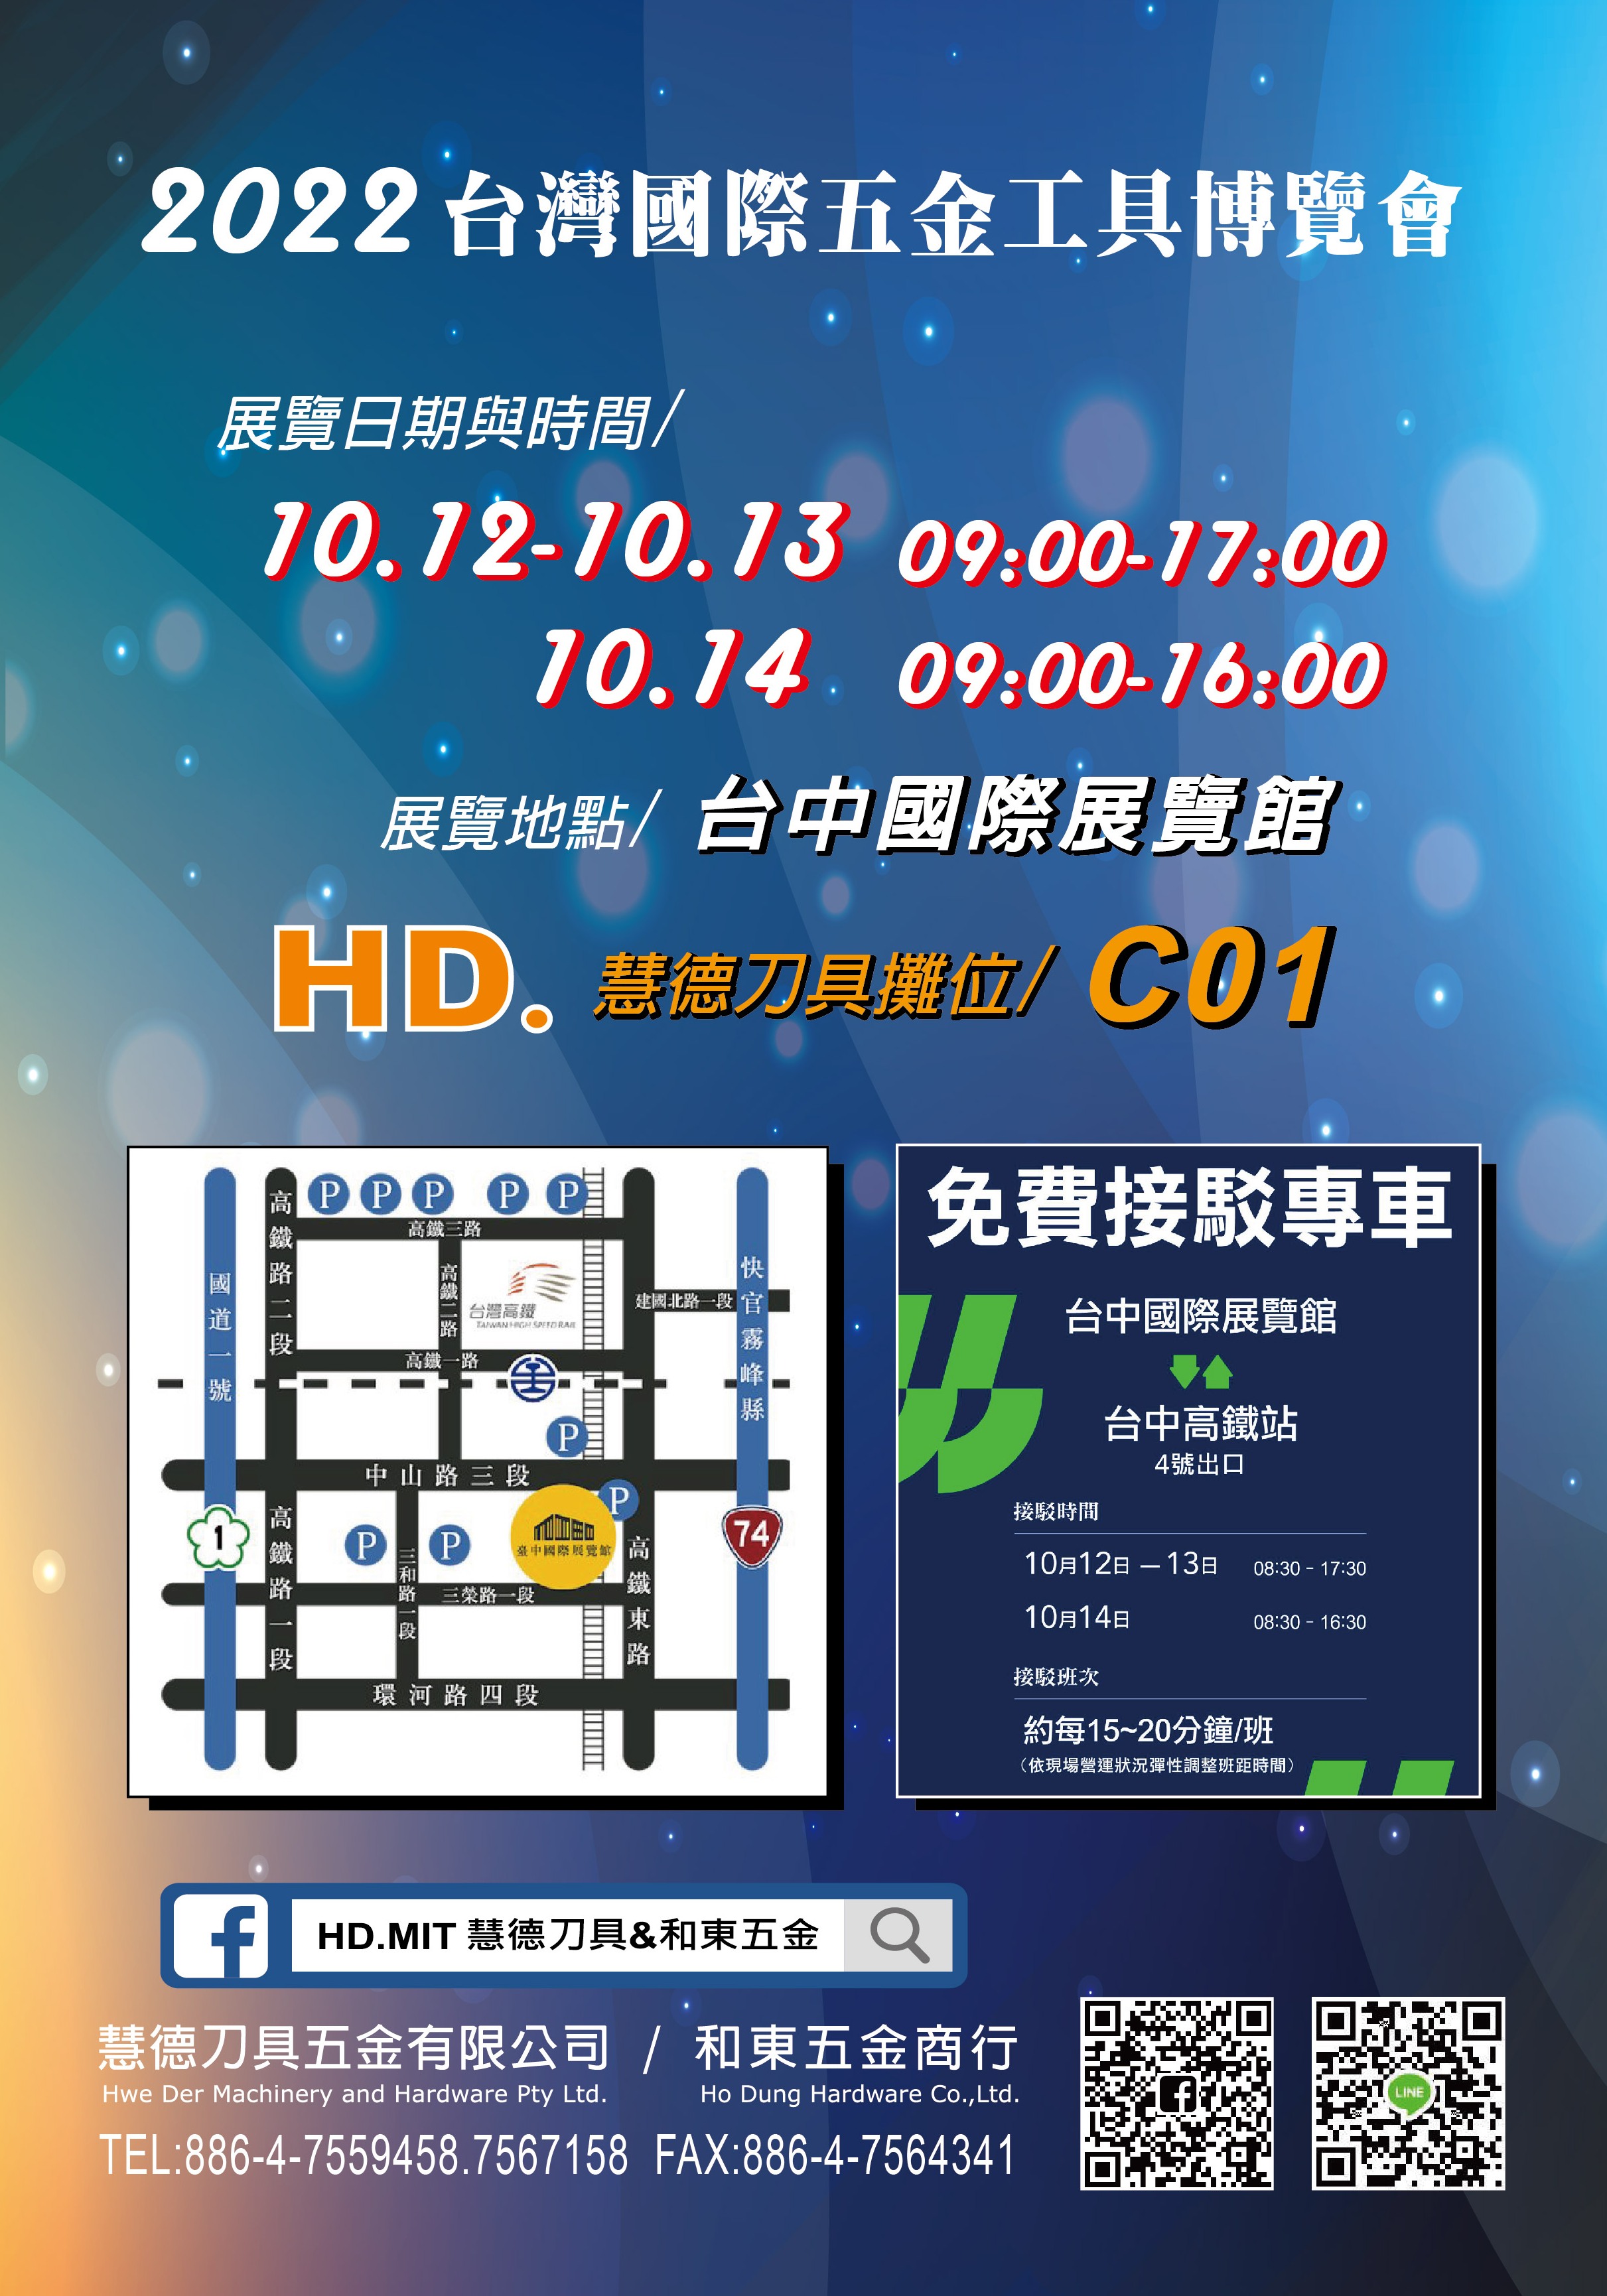 Taiwan International Hardware & Tools Fair 2022